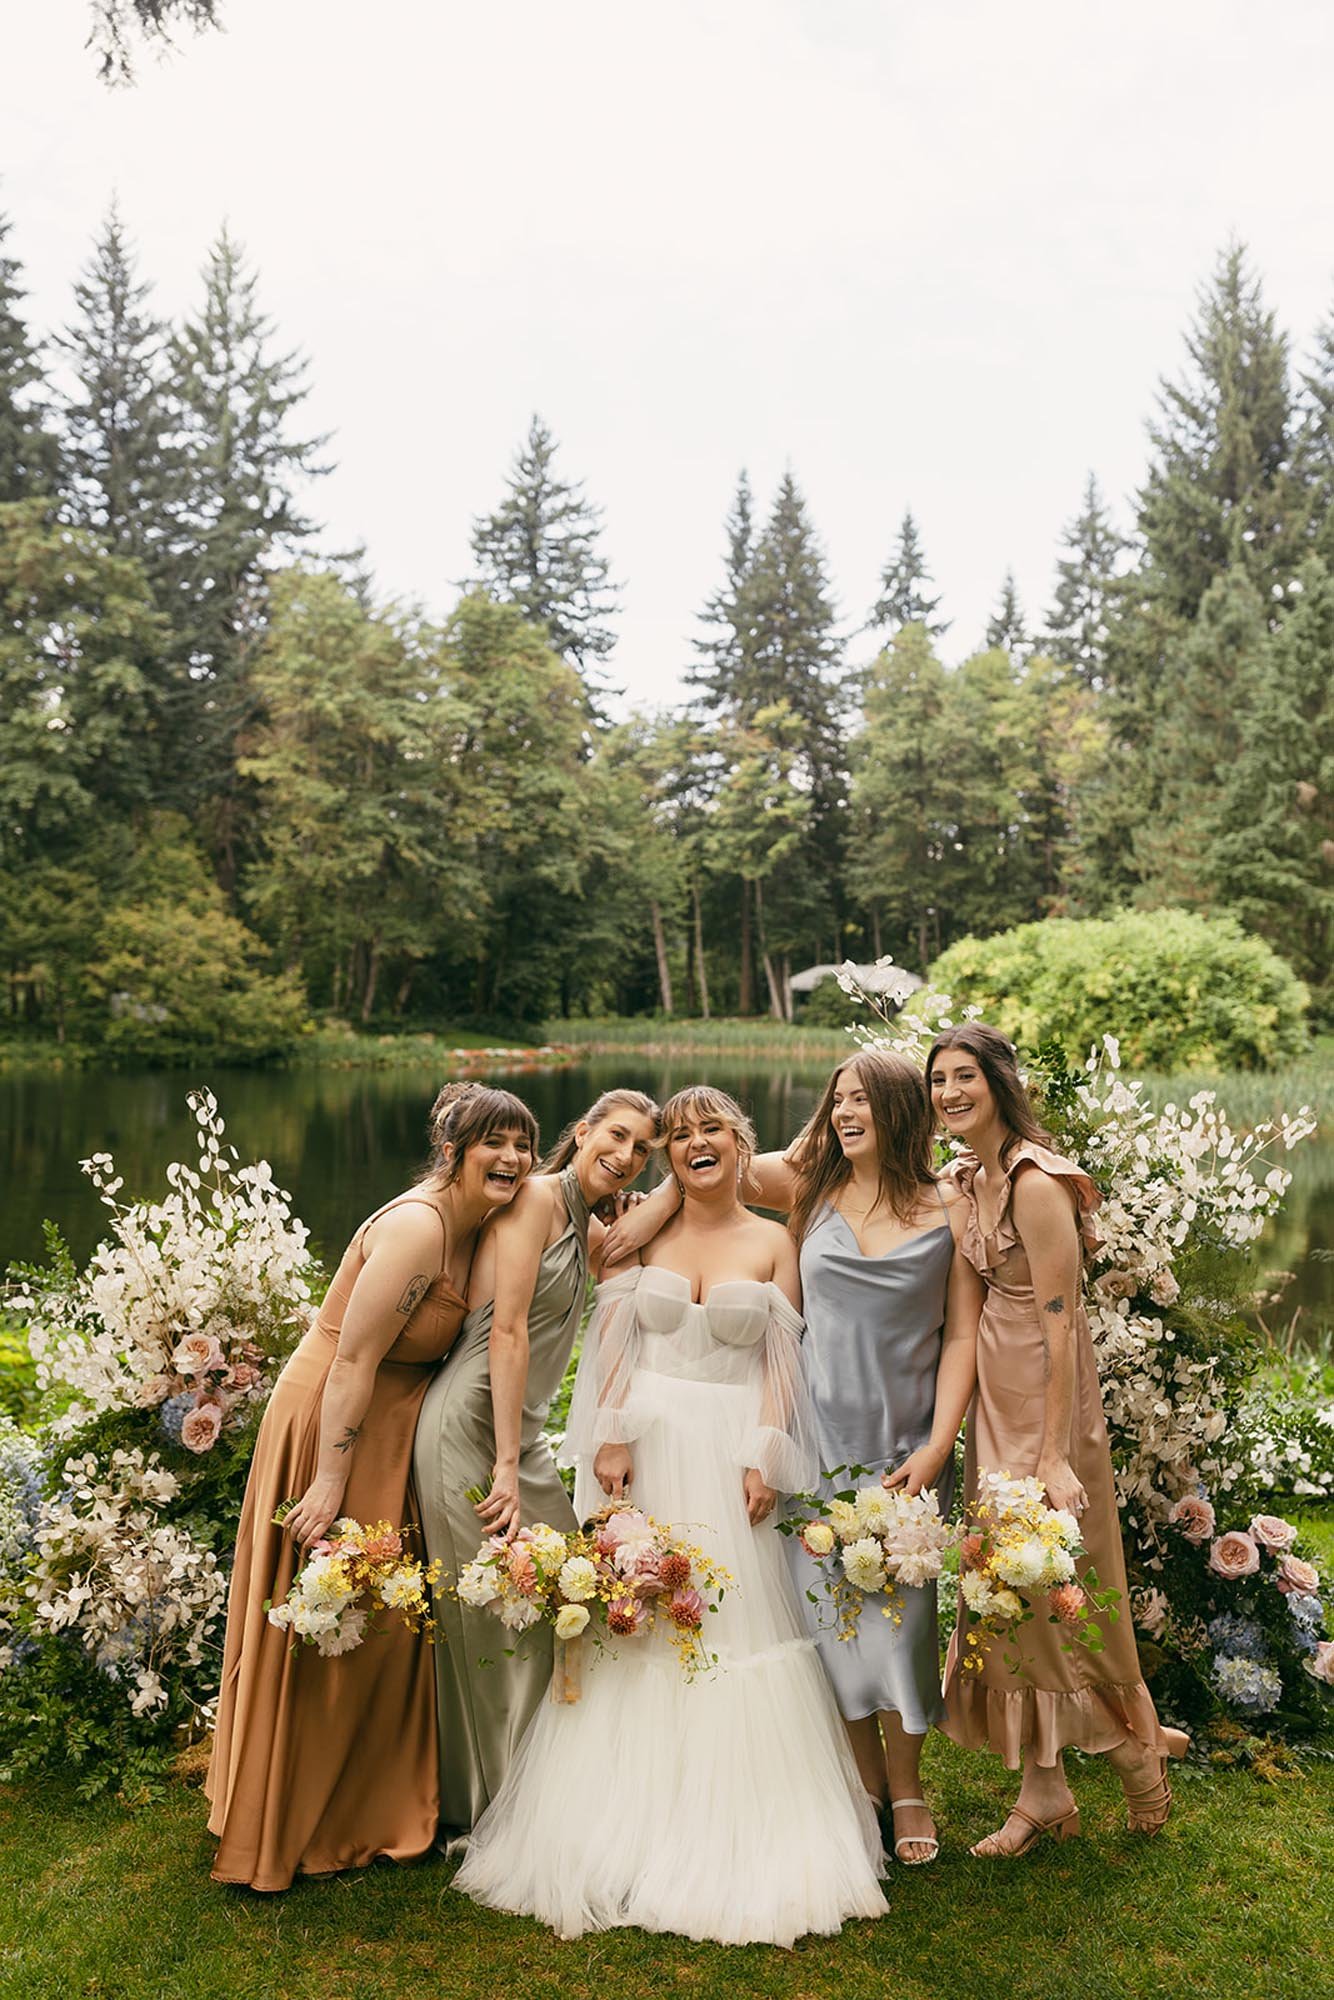 Alena-Leena-Armeria-Dress-for-a-Portland-Garden-Wedding-10.jpg